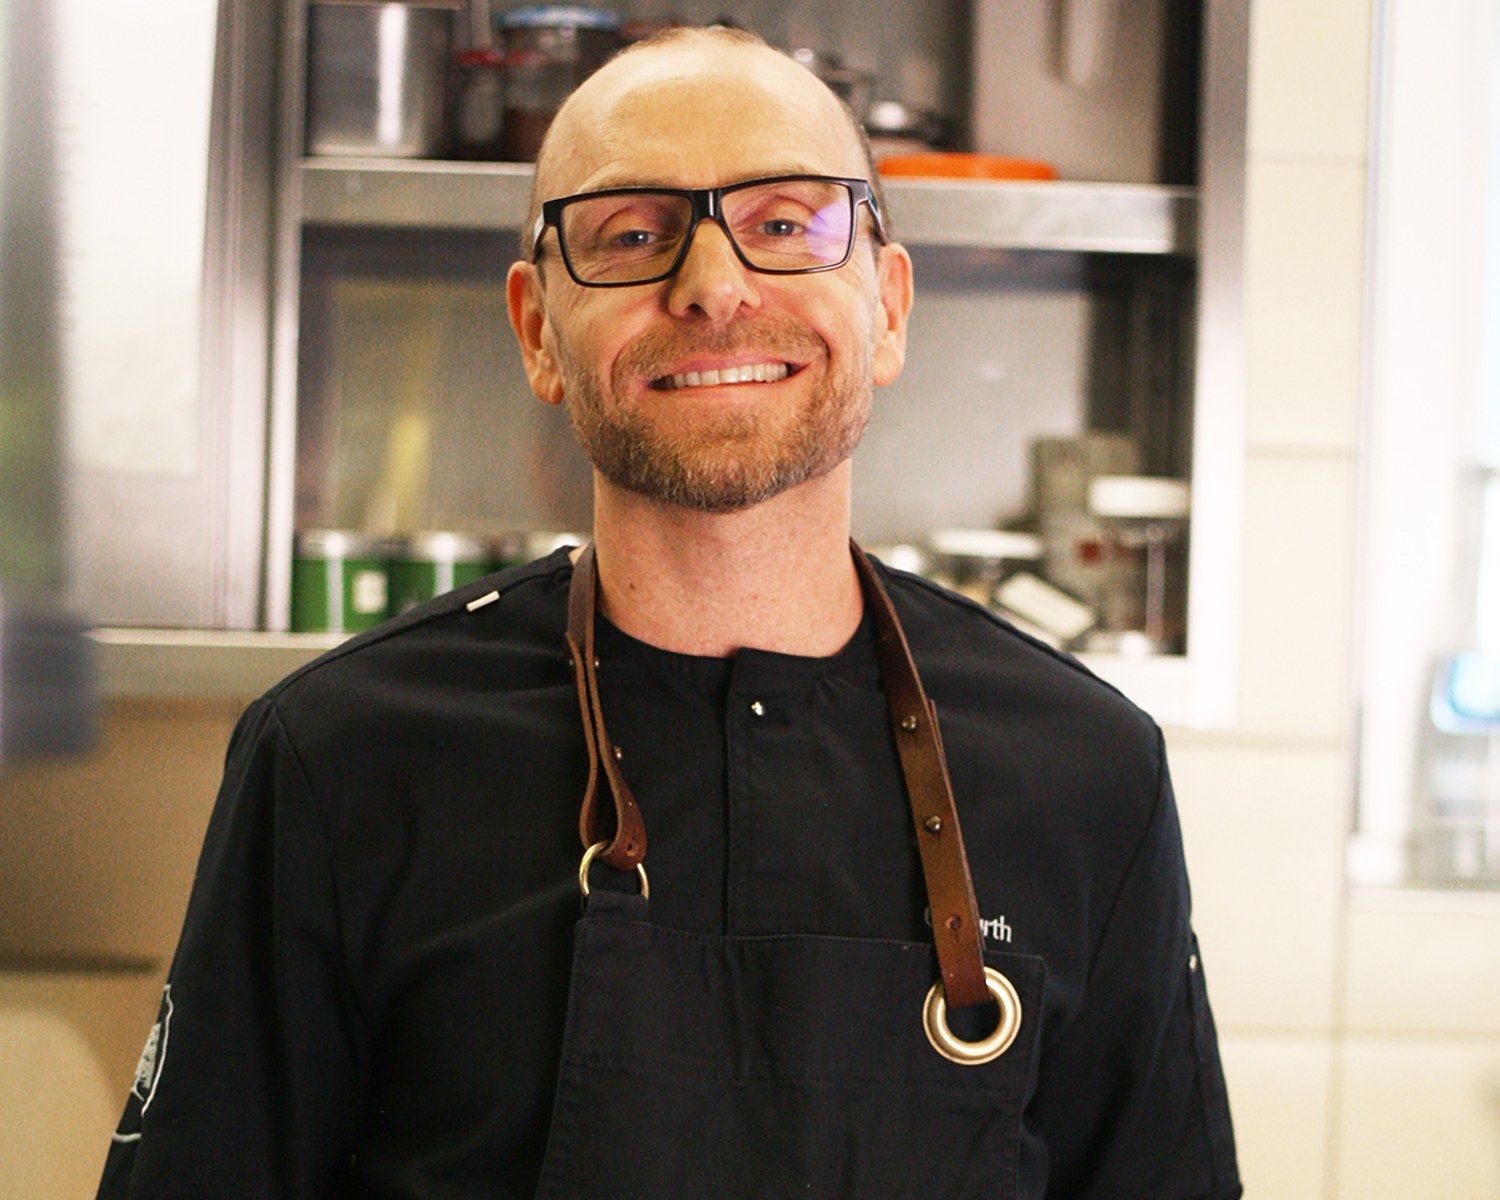 Professional chef Claus Barth